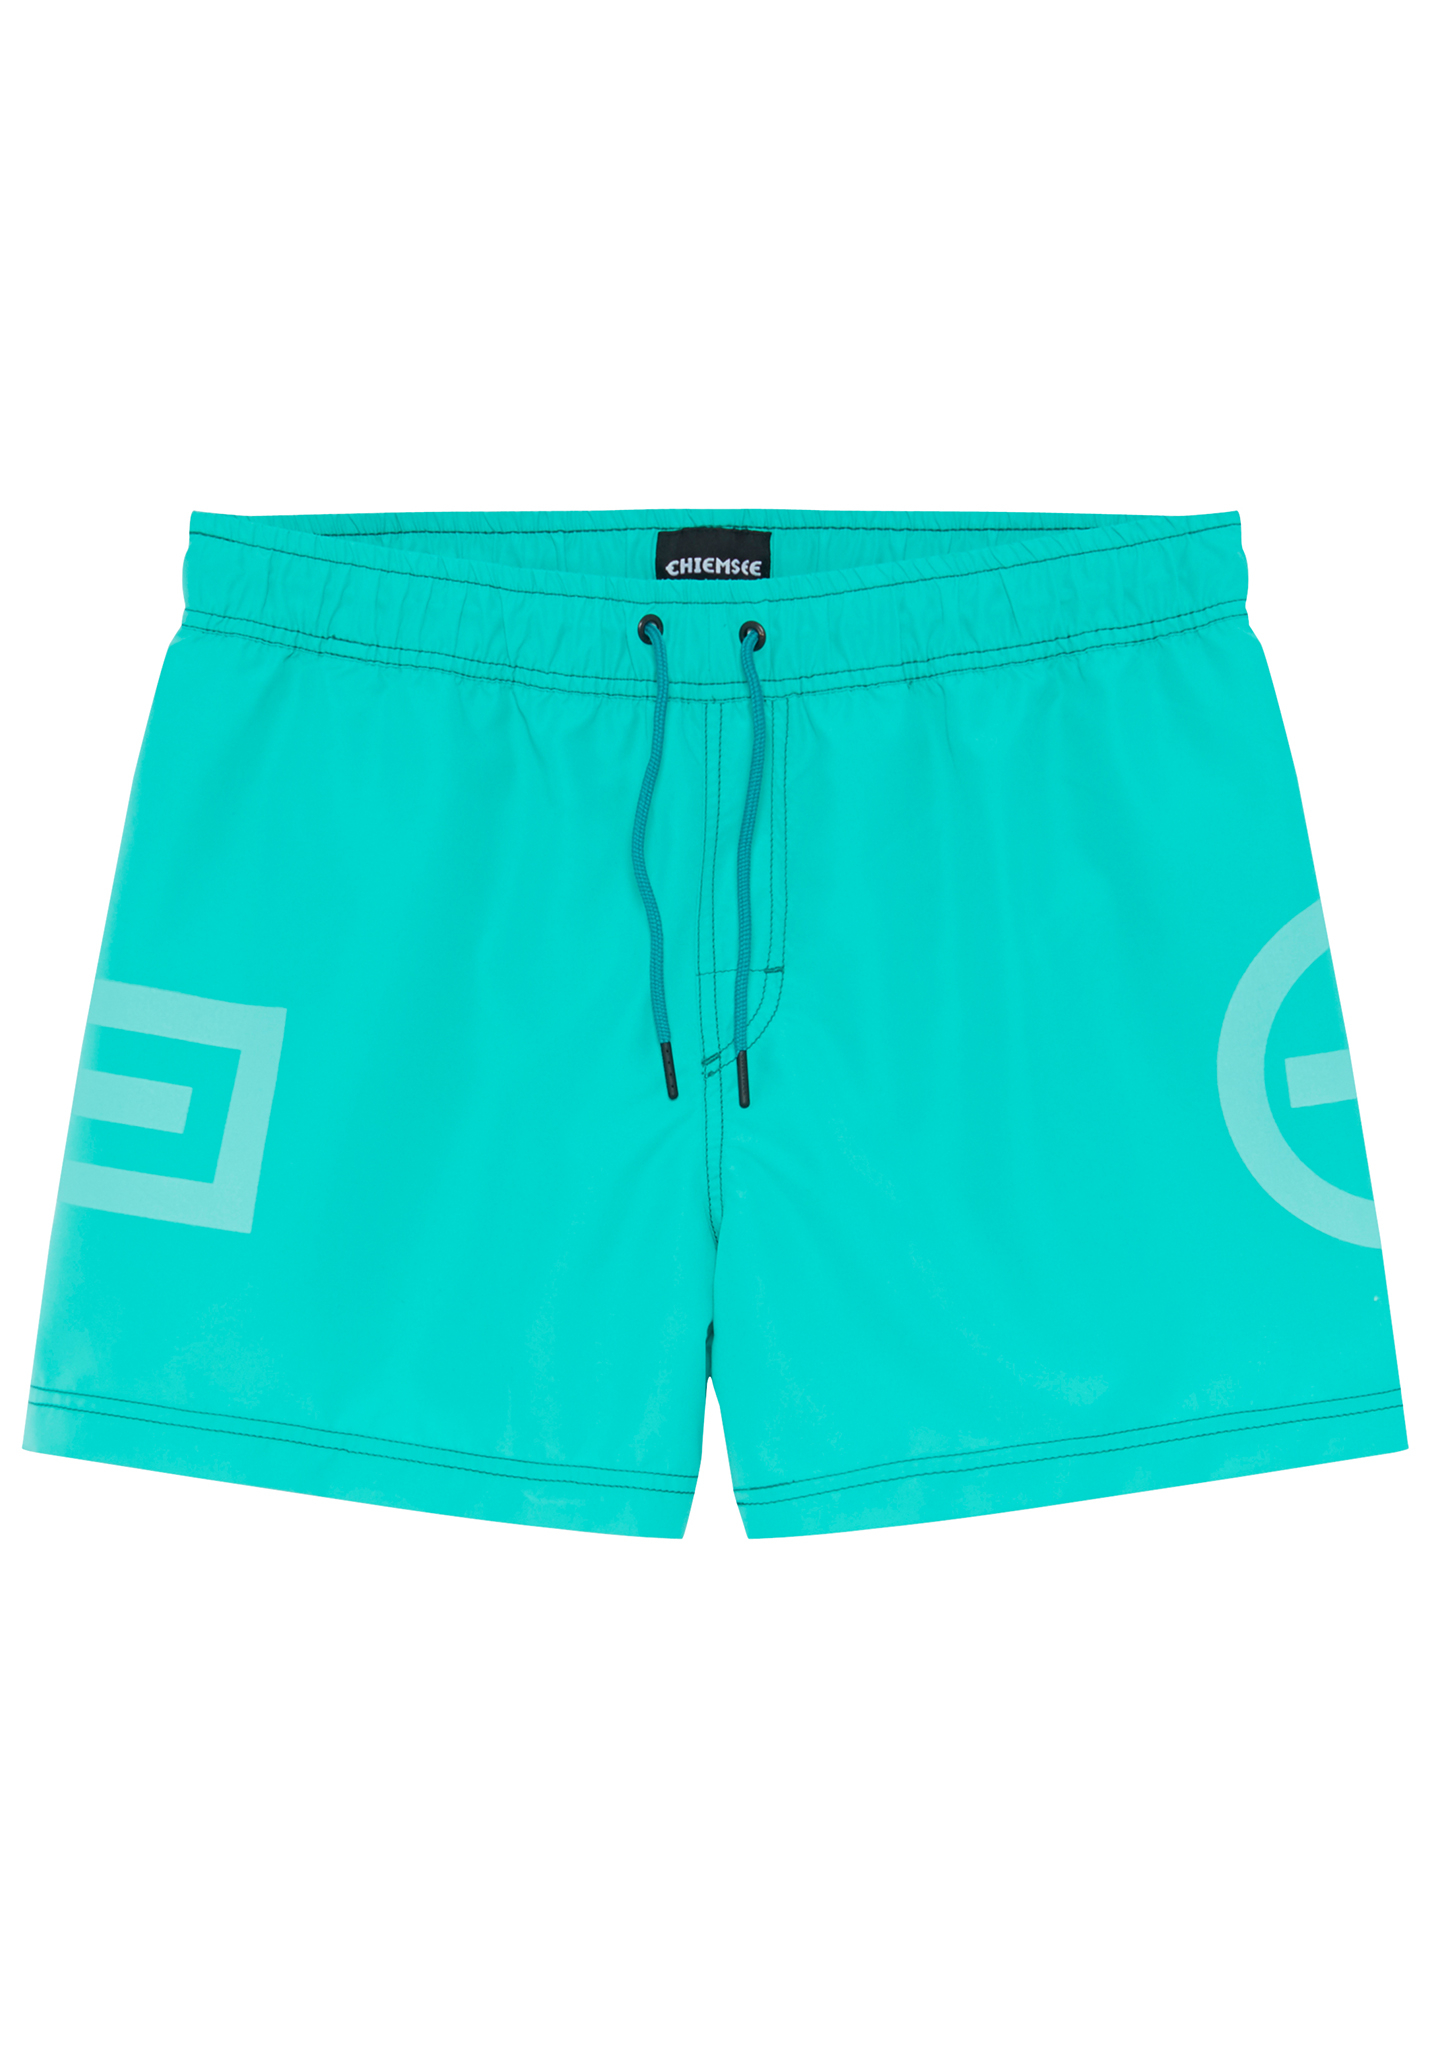 Chiemsee Swimshorts Boardshorts turquoise L